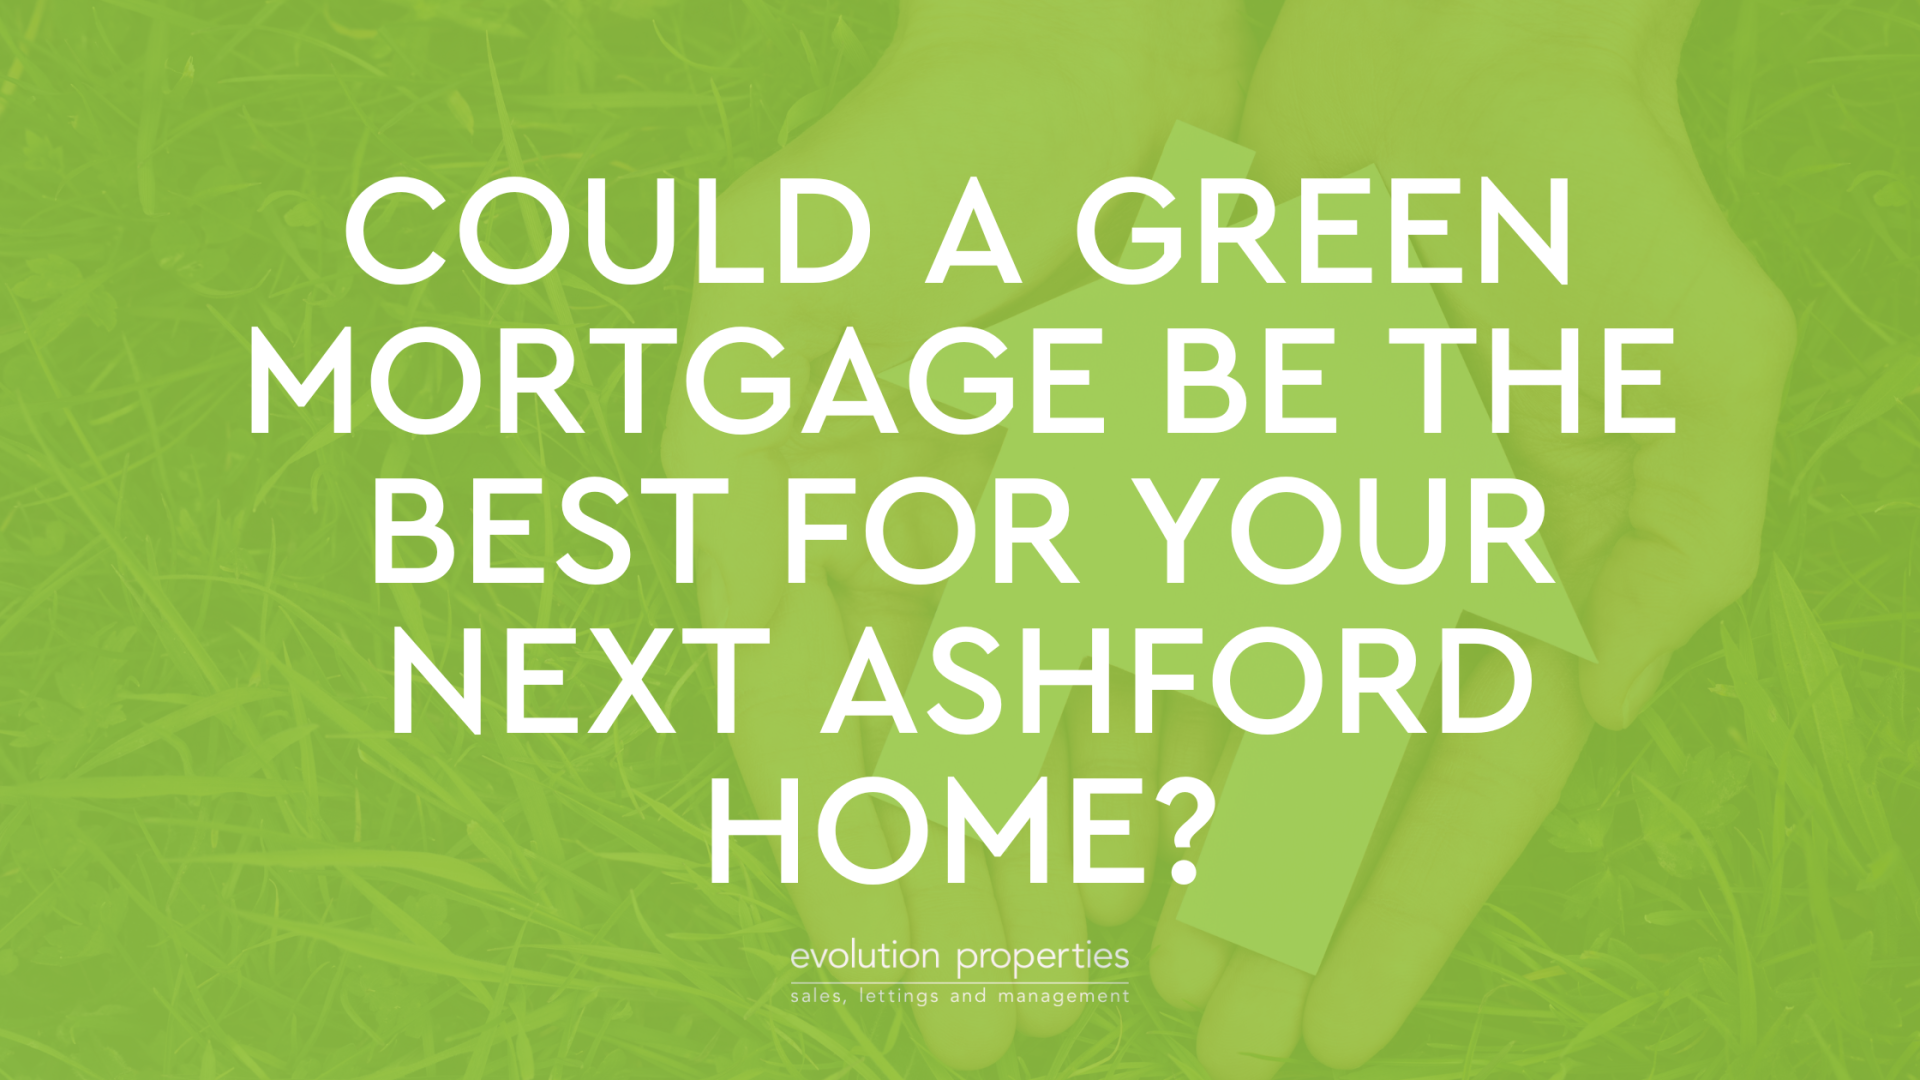 green mortgage  next Ashford home?